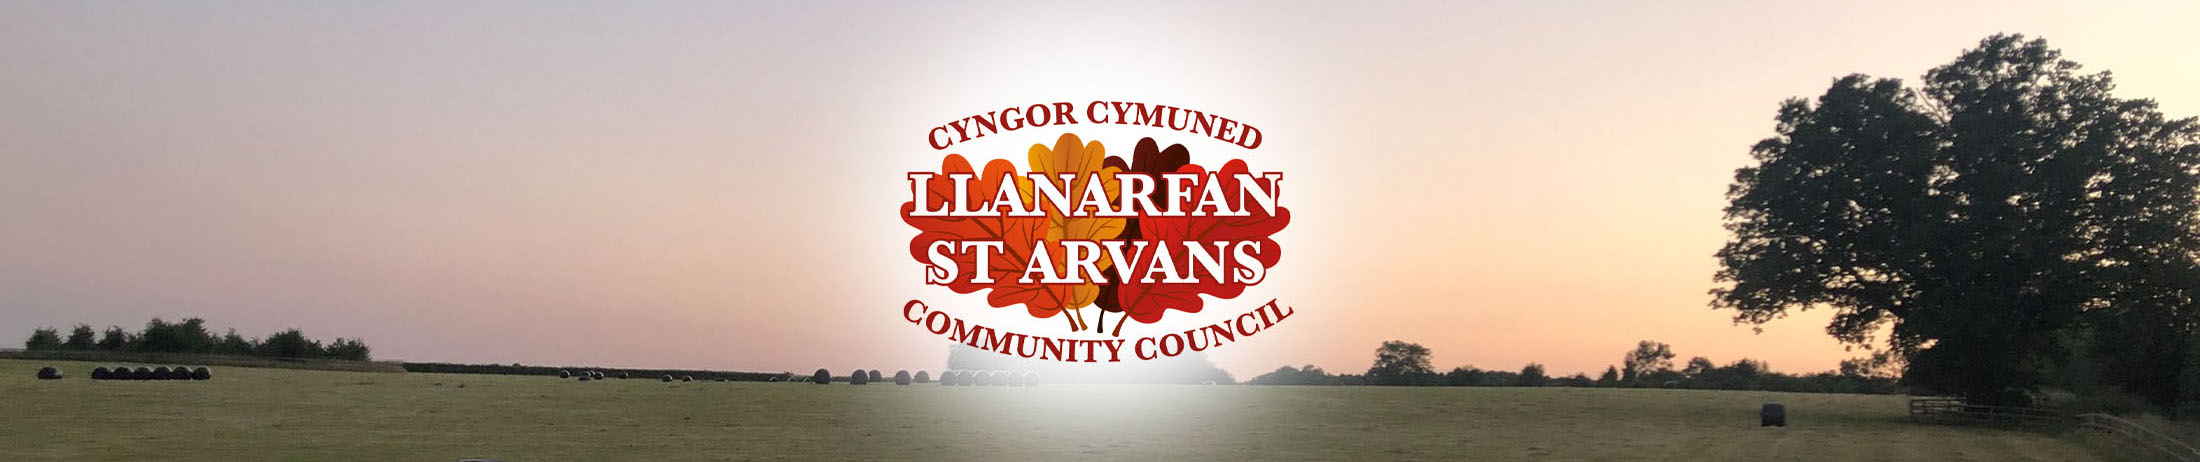 Header Image for St Arvans Community Council